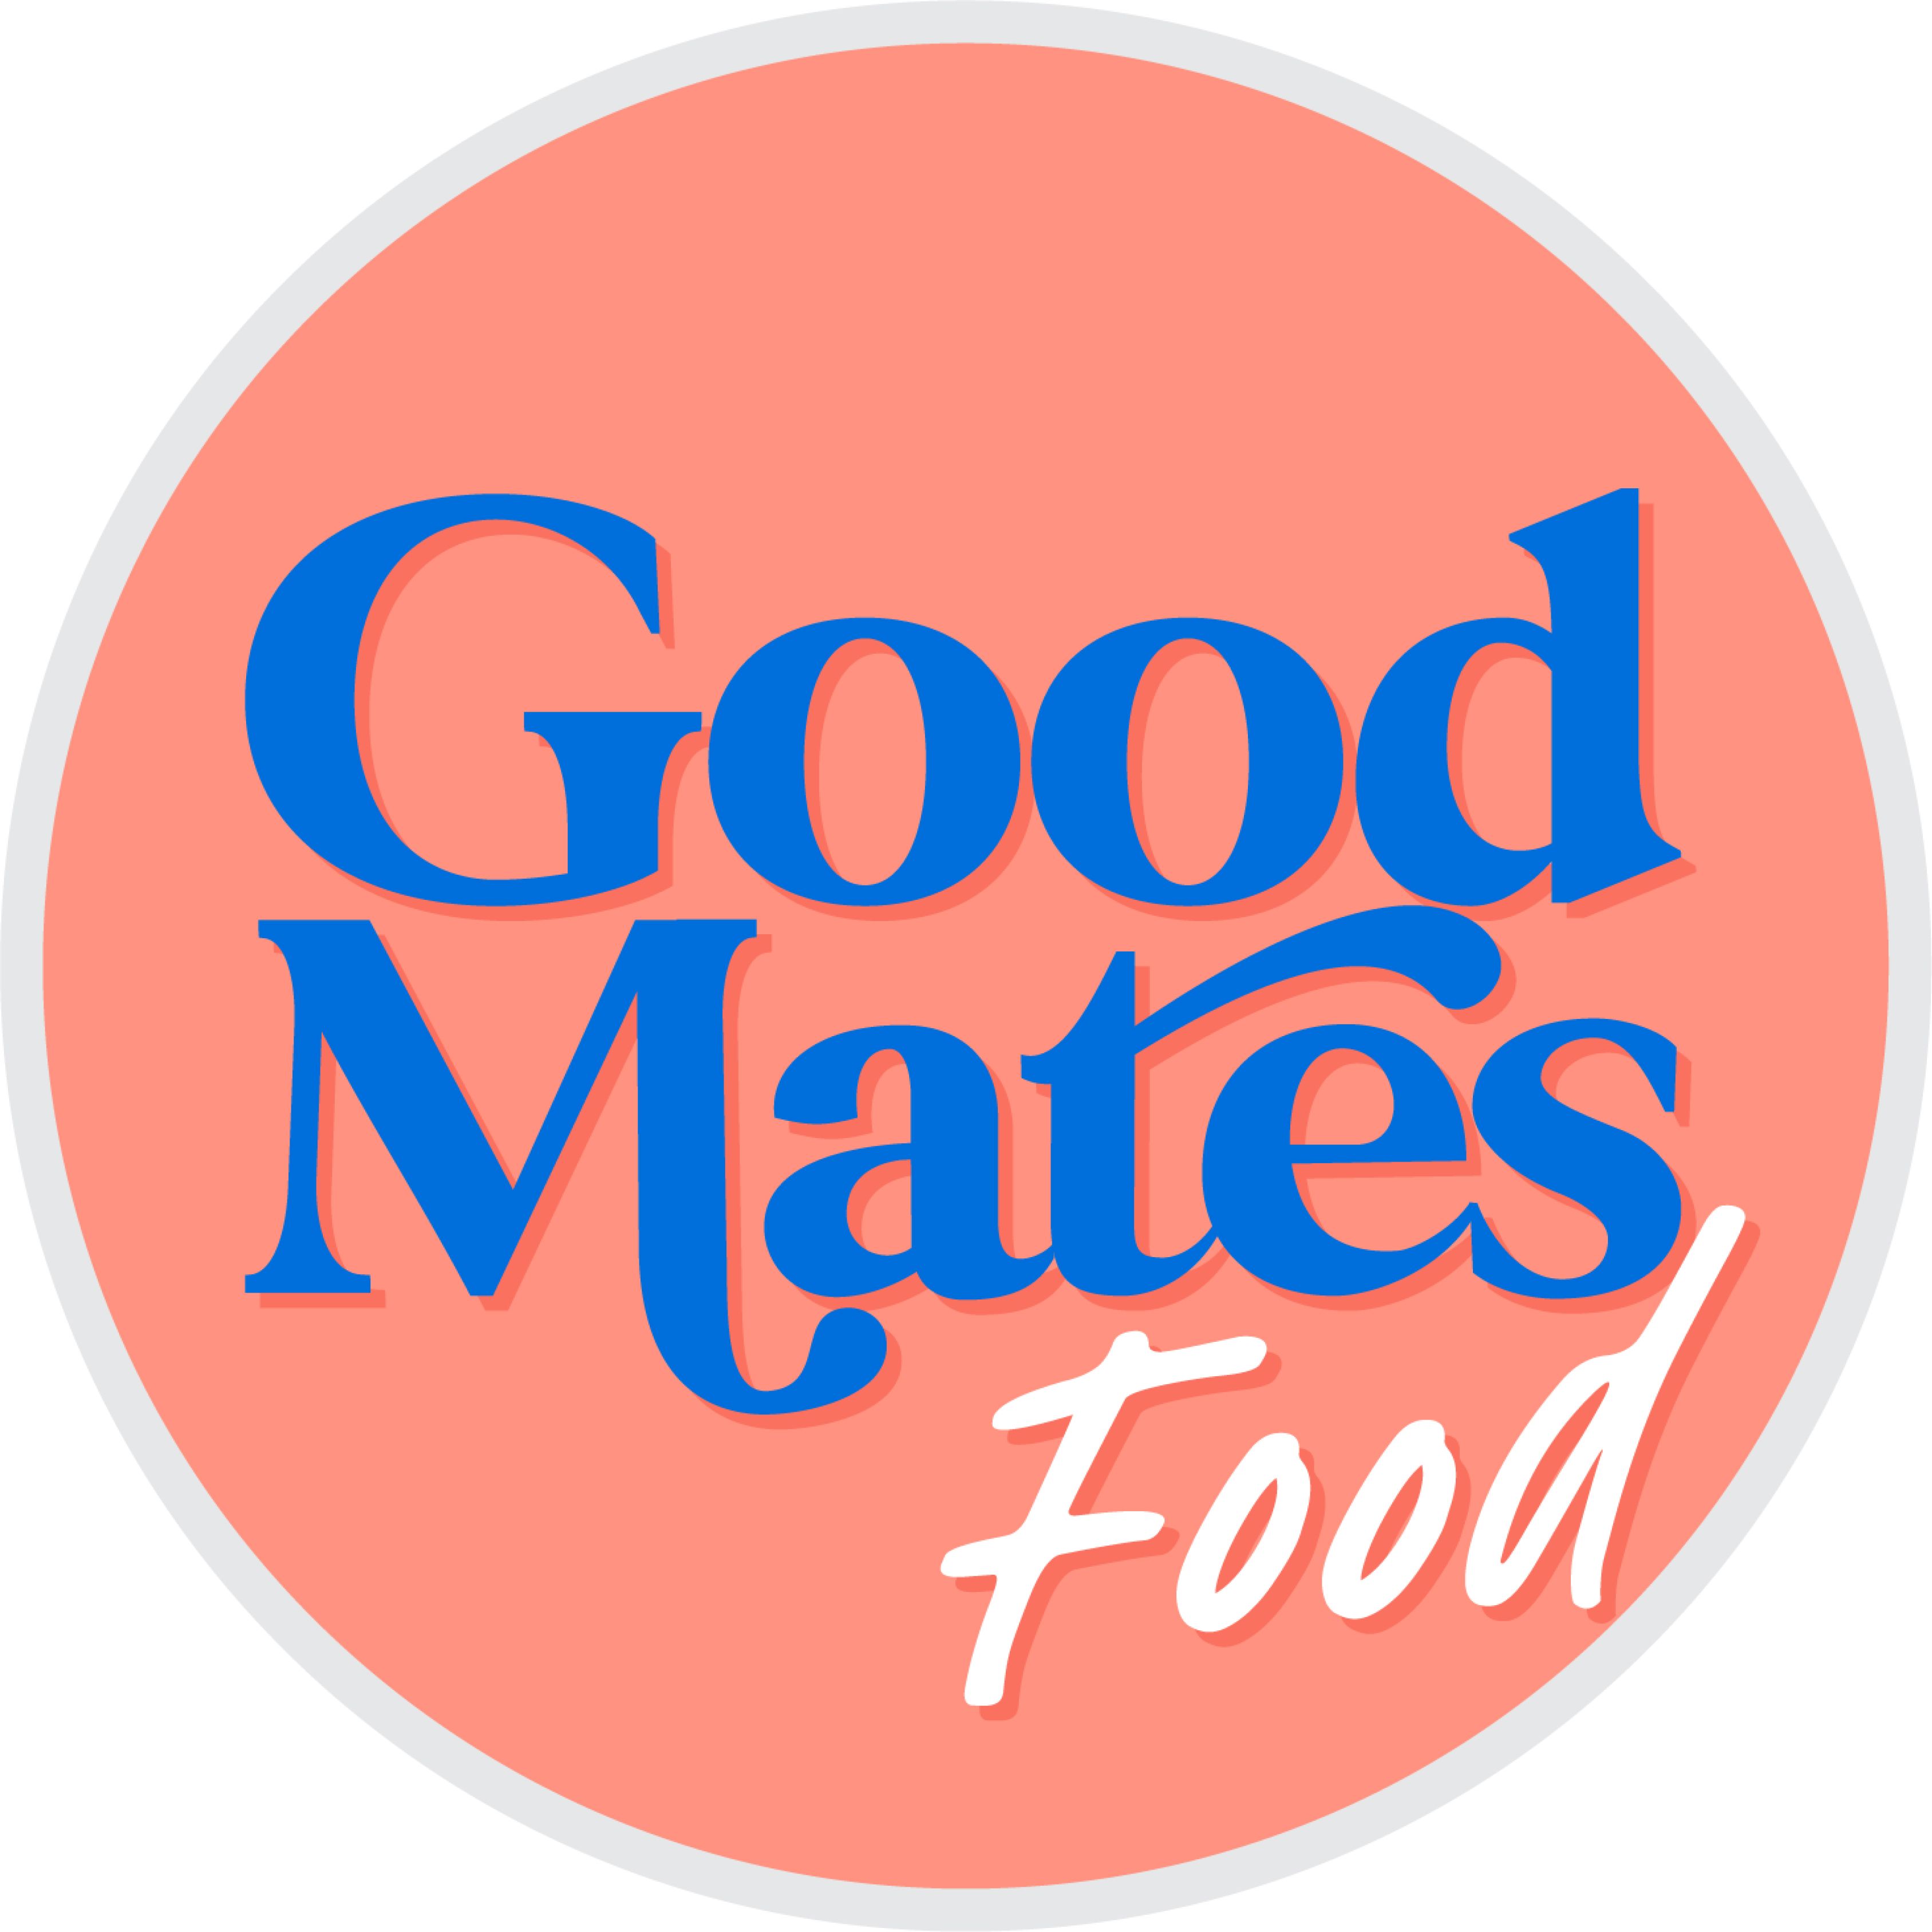 GoodMates Fine Foods Pte. Ltd.